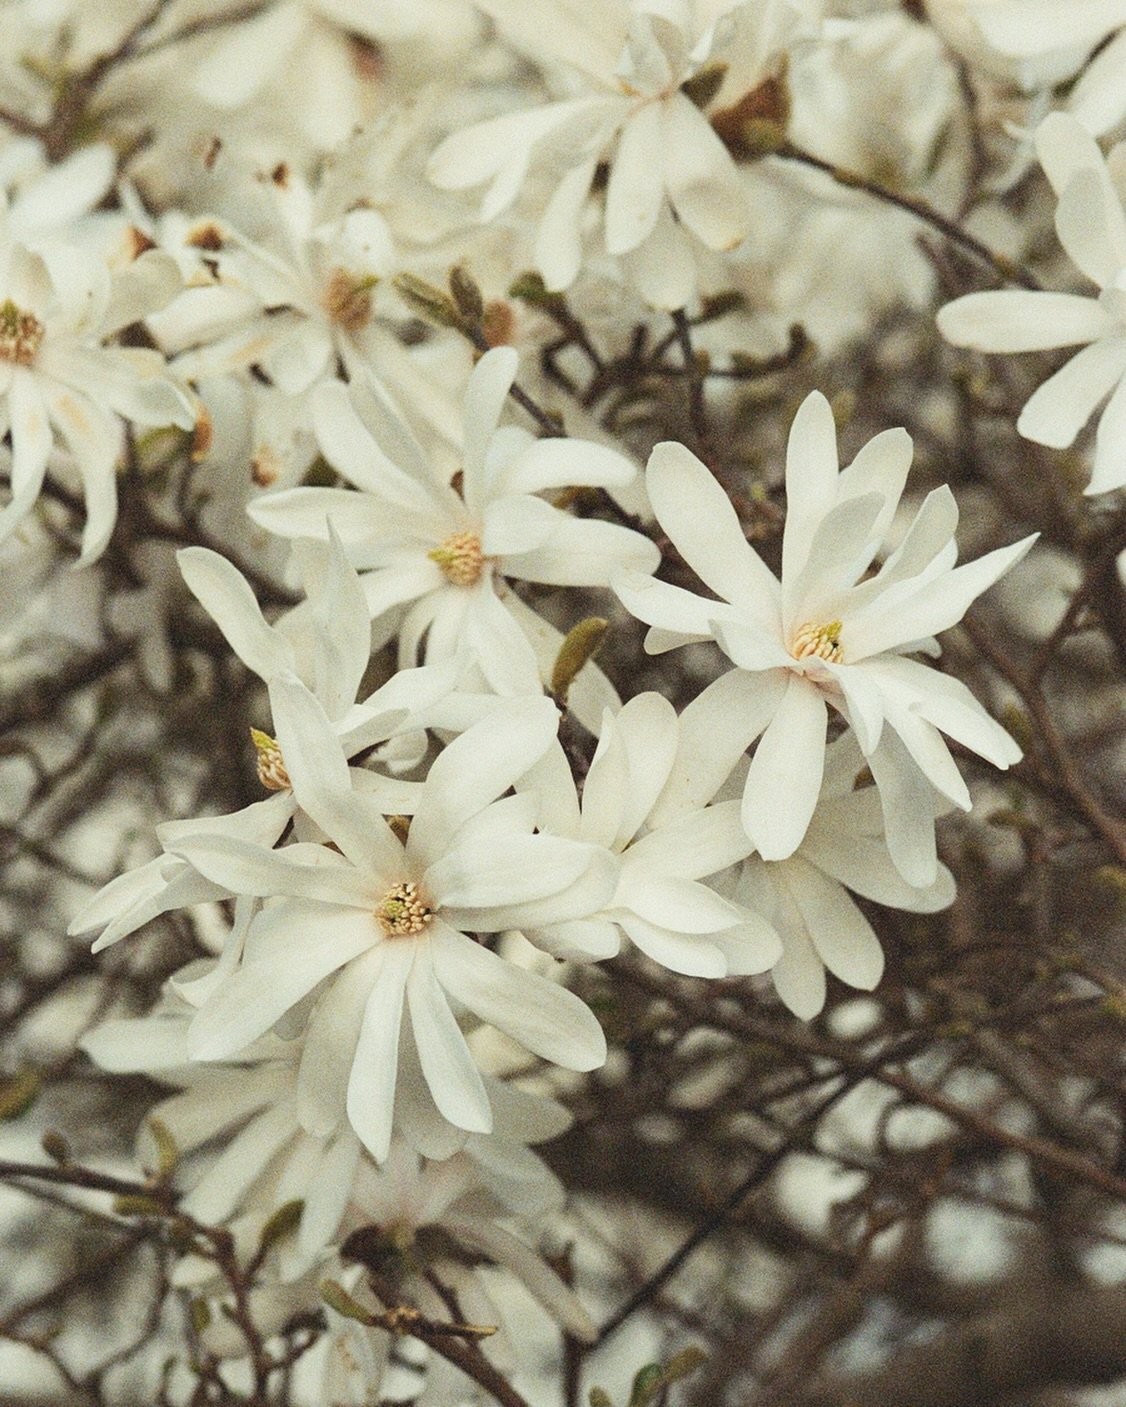 Throwback to a few weeks ago: Magnolias on film 🤍

~

#35mm #portra800 #shootfilm #expiredfilm #analog #magnolias